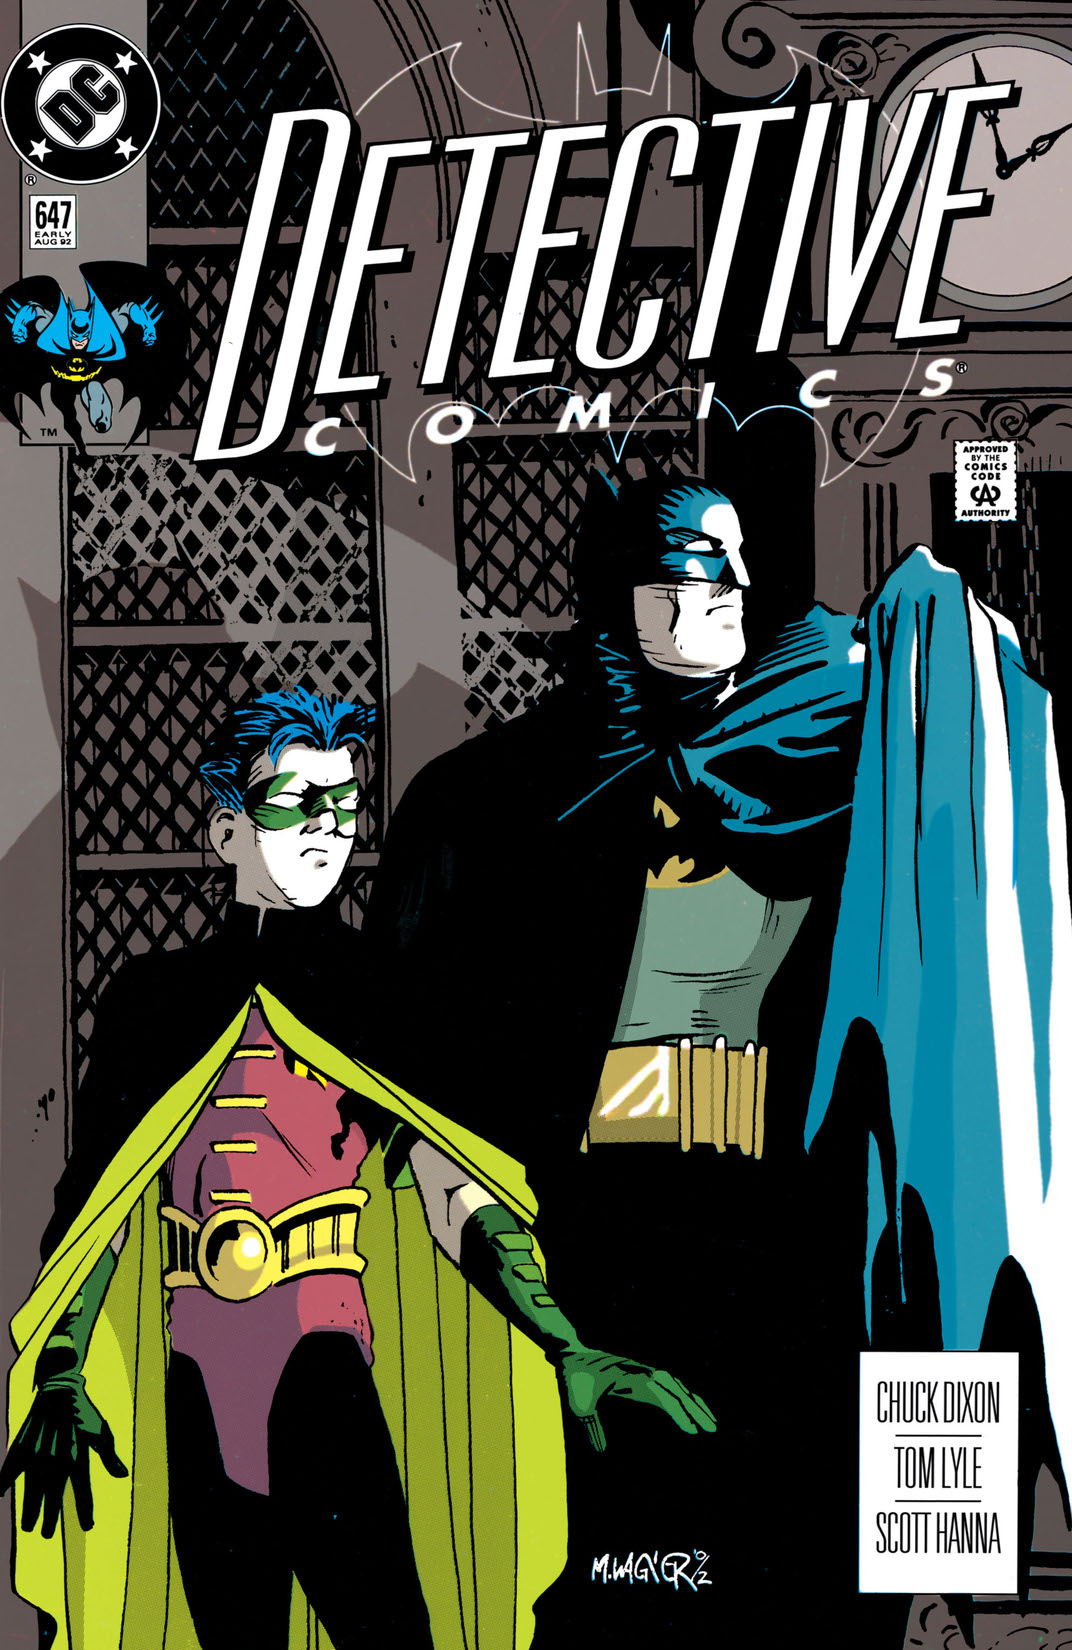 Detective Comics (1937-) #647 preview images